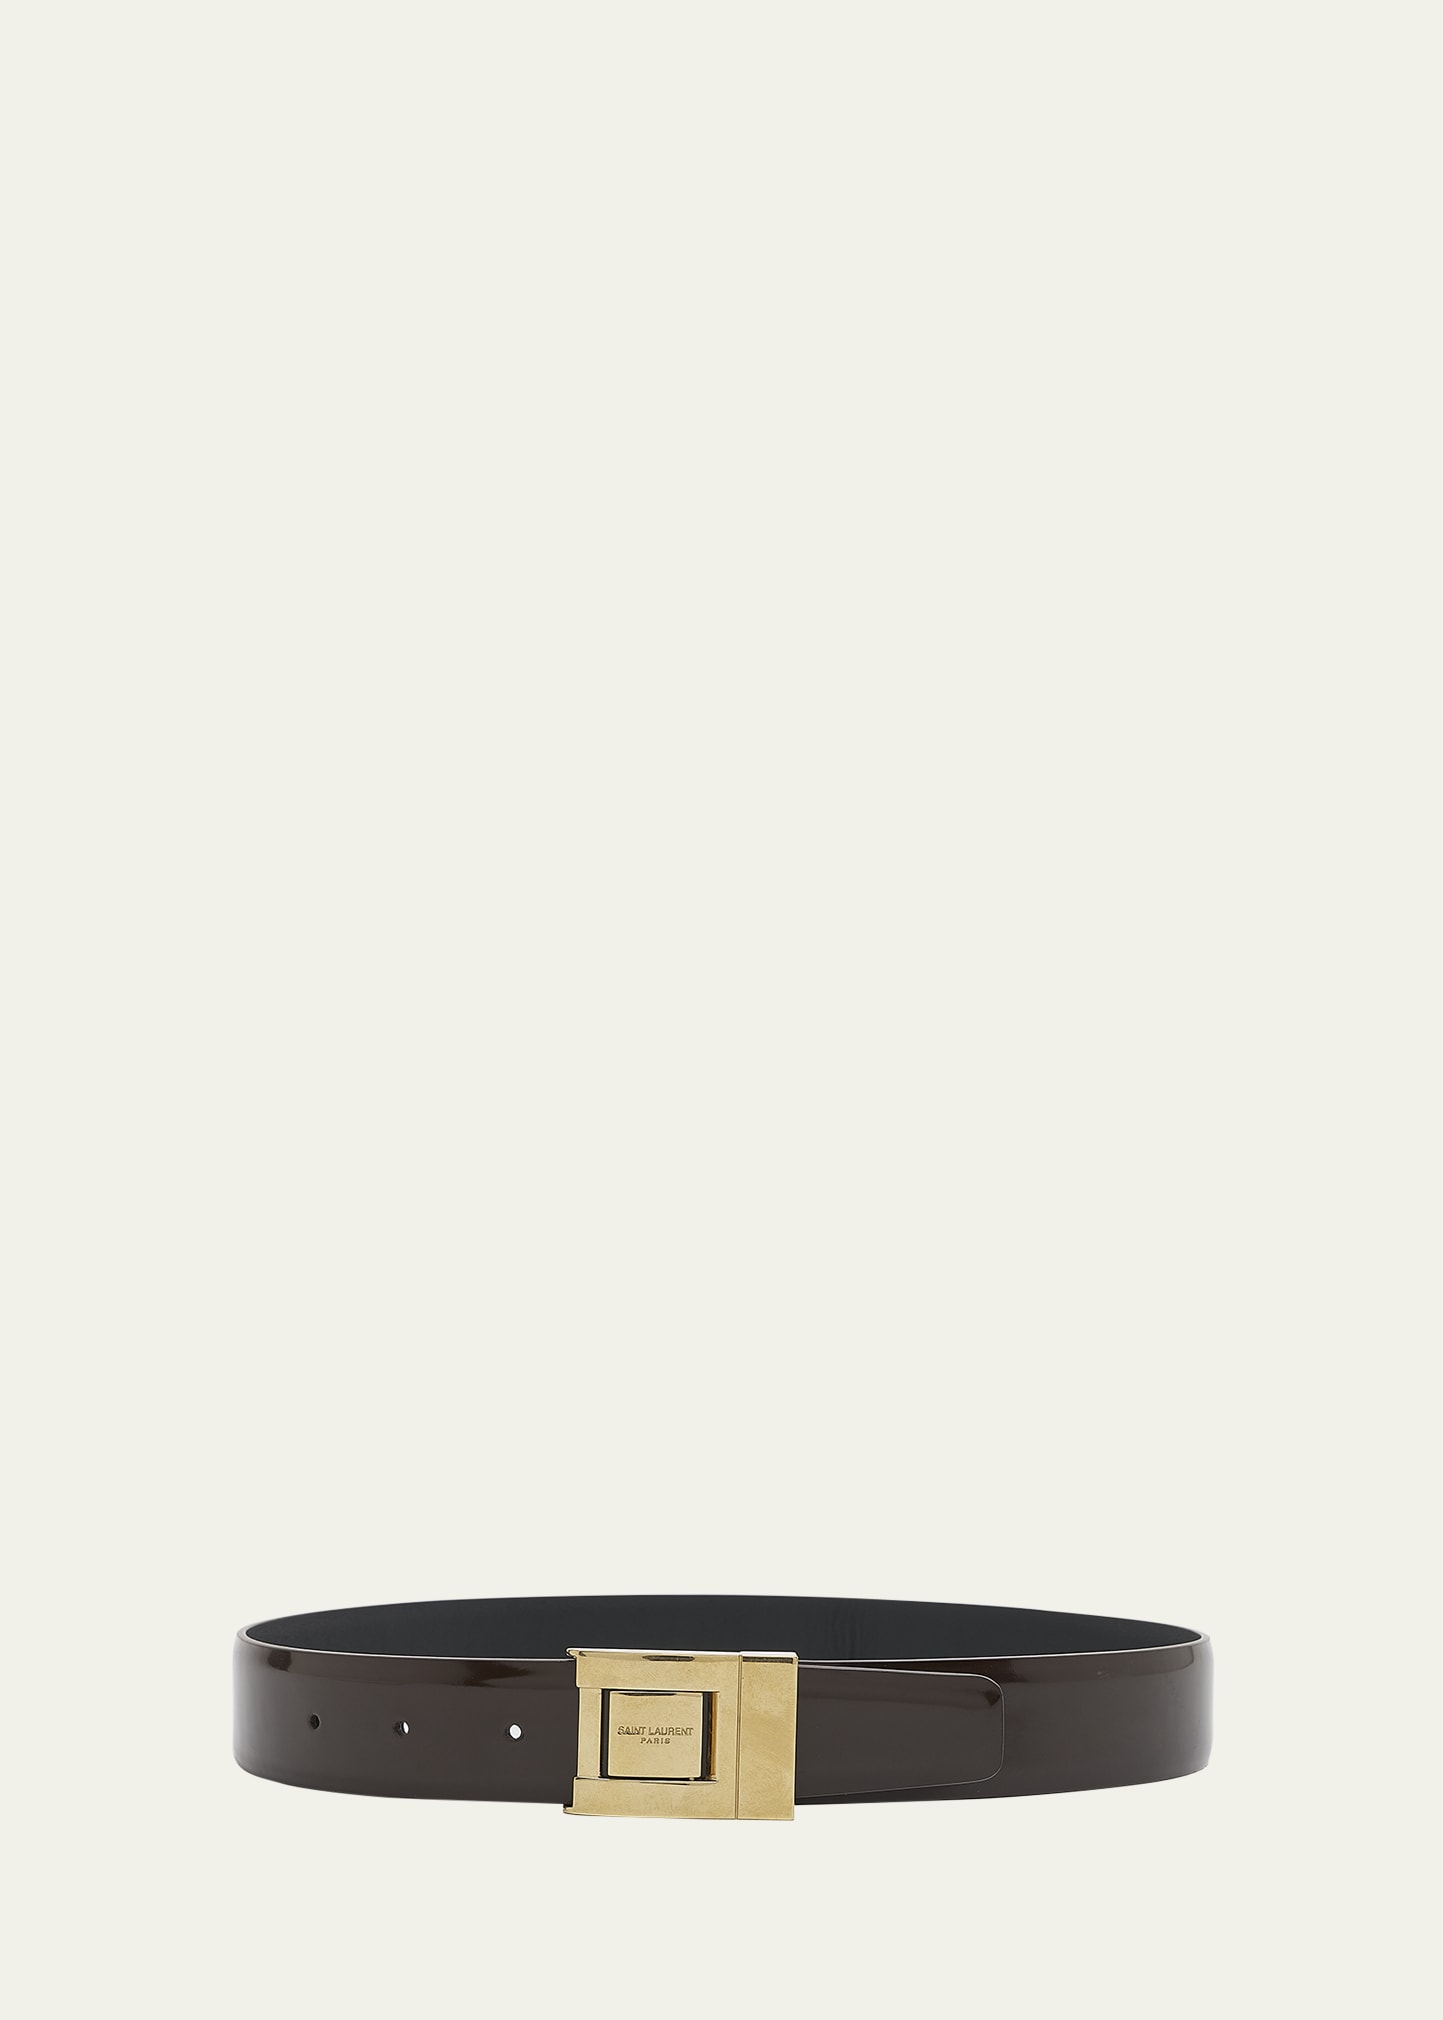 Saint Laurent Patent Leather Belt With Golden Hardware In 2545 Dark Maroon